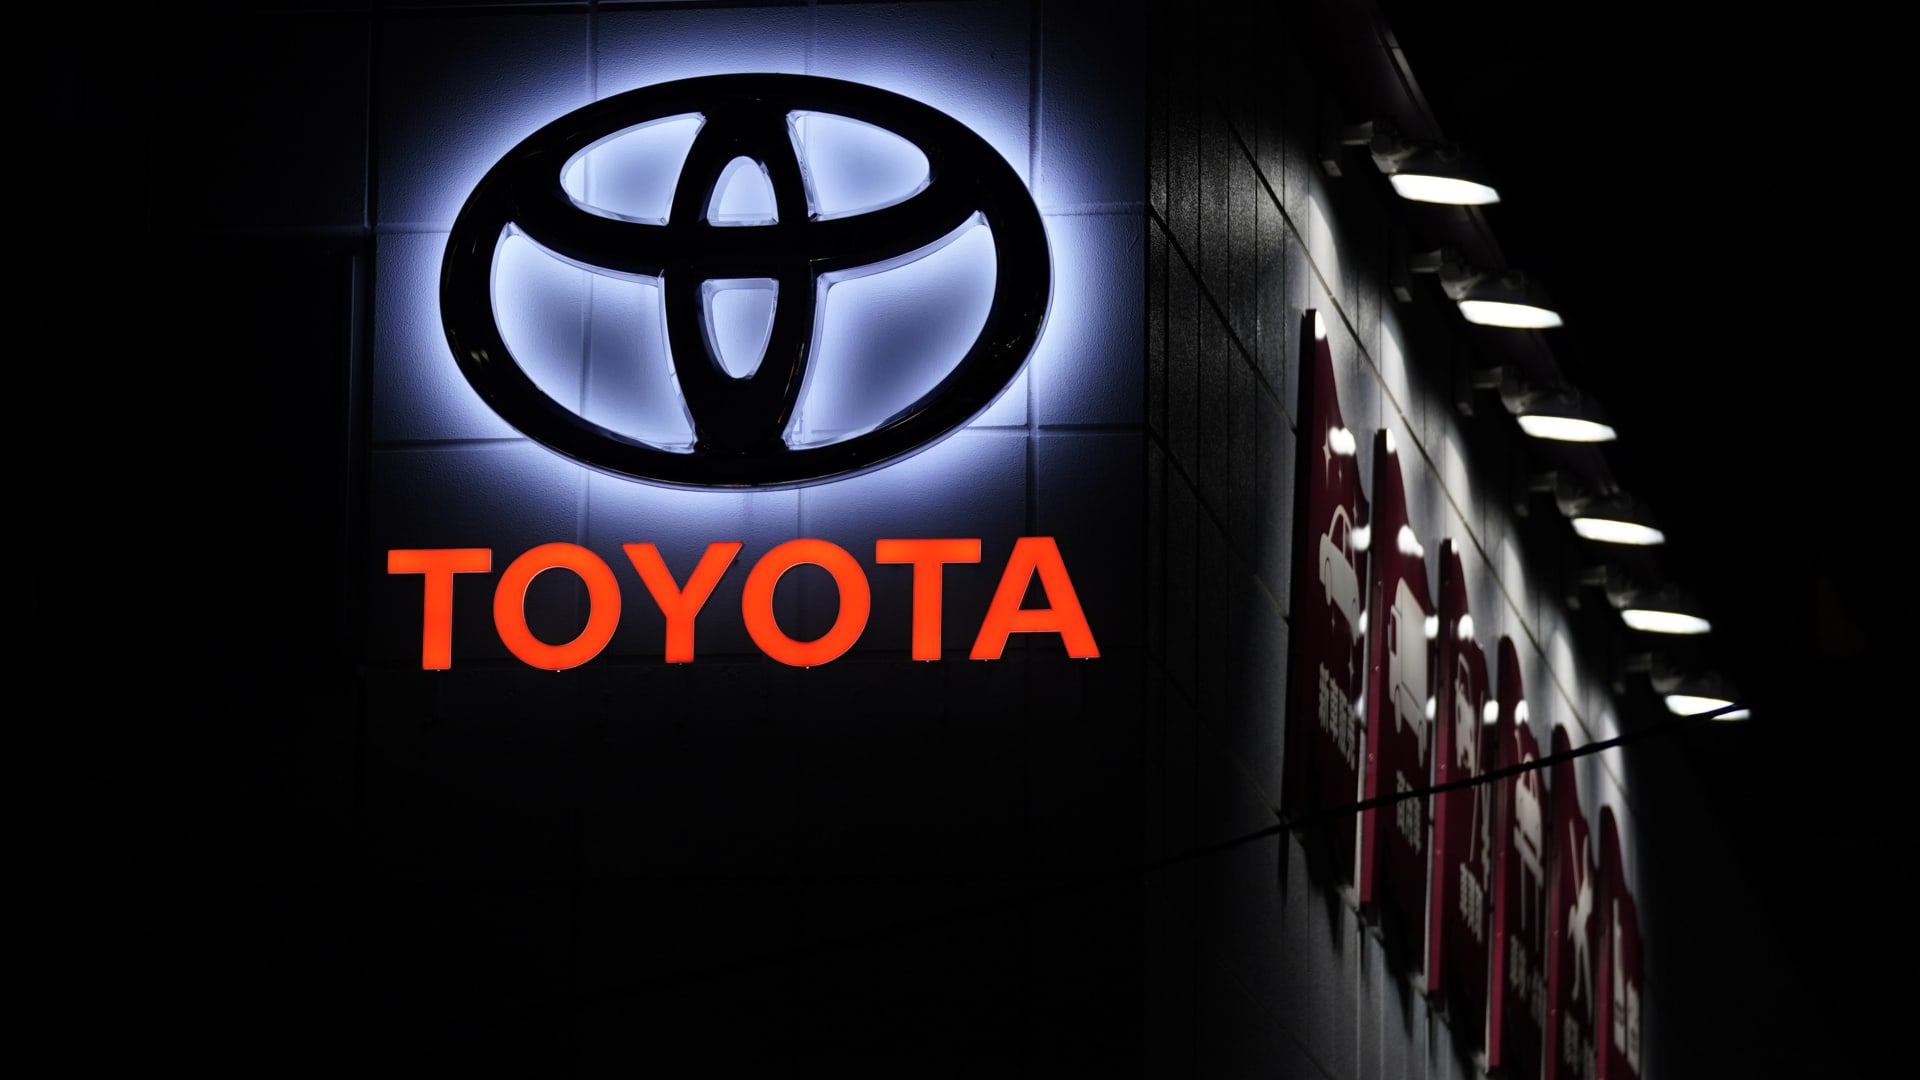 Toyota says it will invest extra $2.5 billion in North Carolina plant